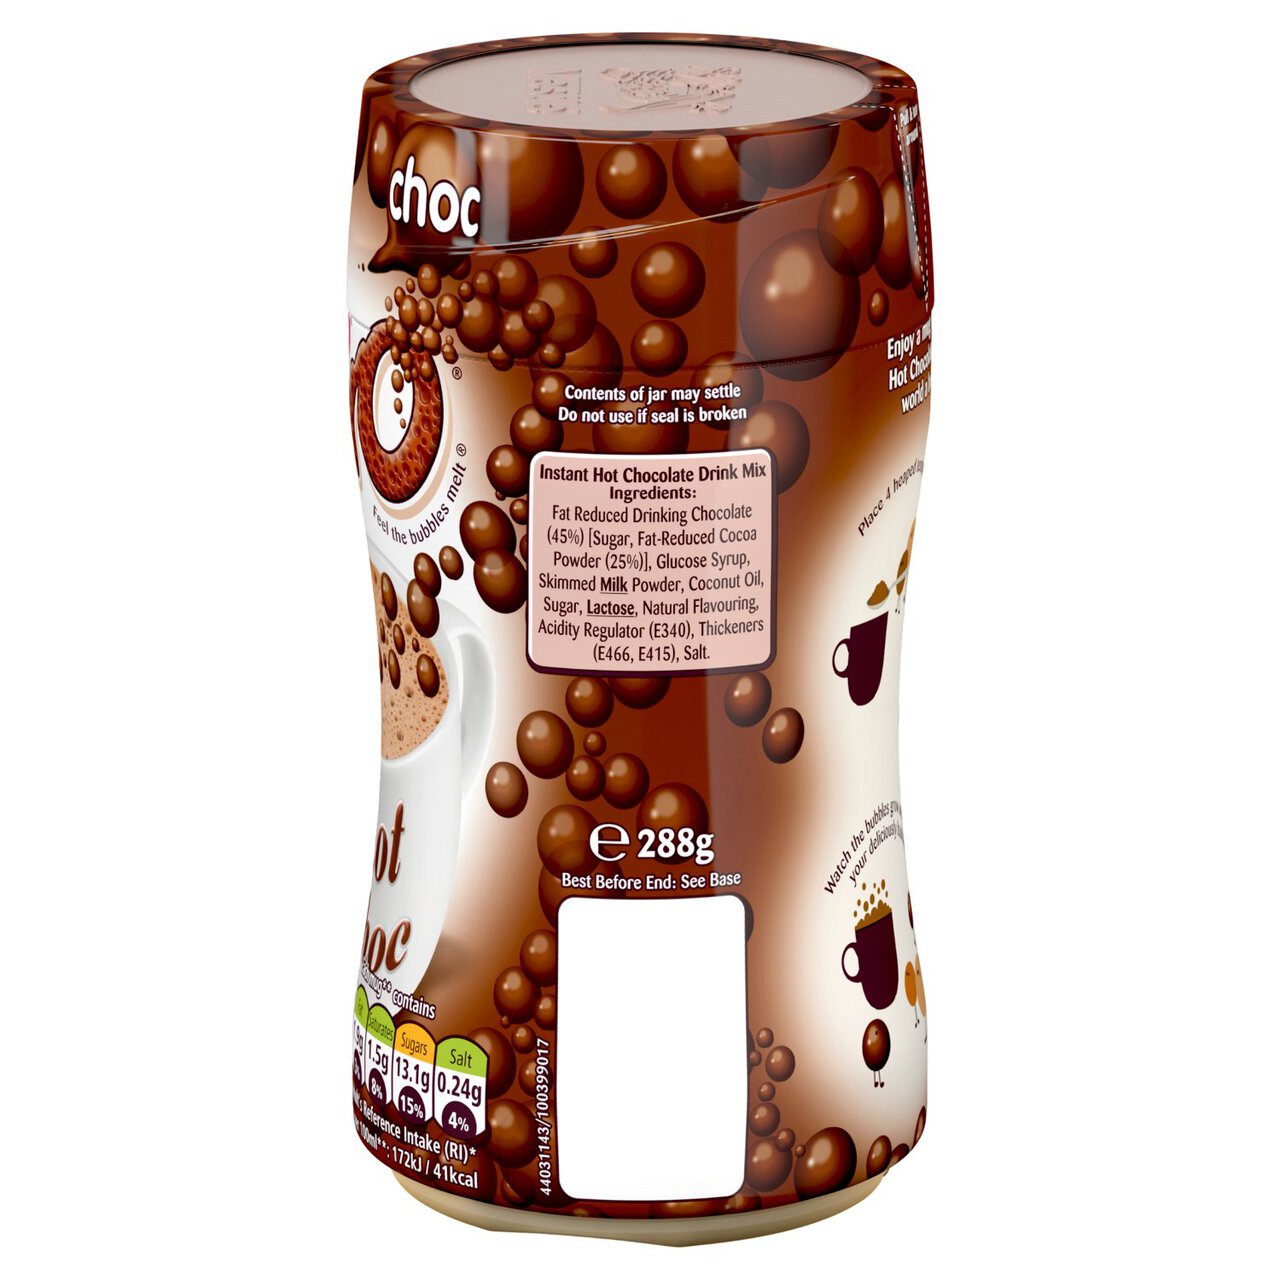 Aero Instant Chocolate Drink 288g